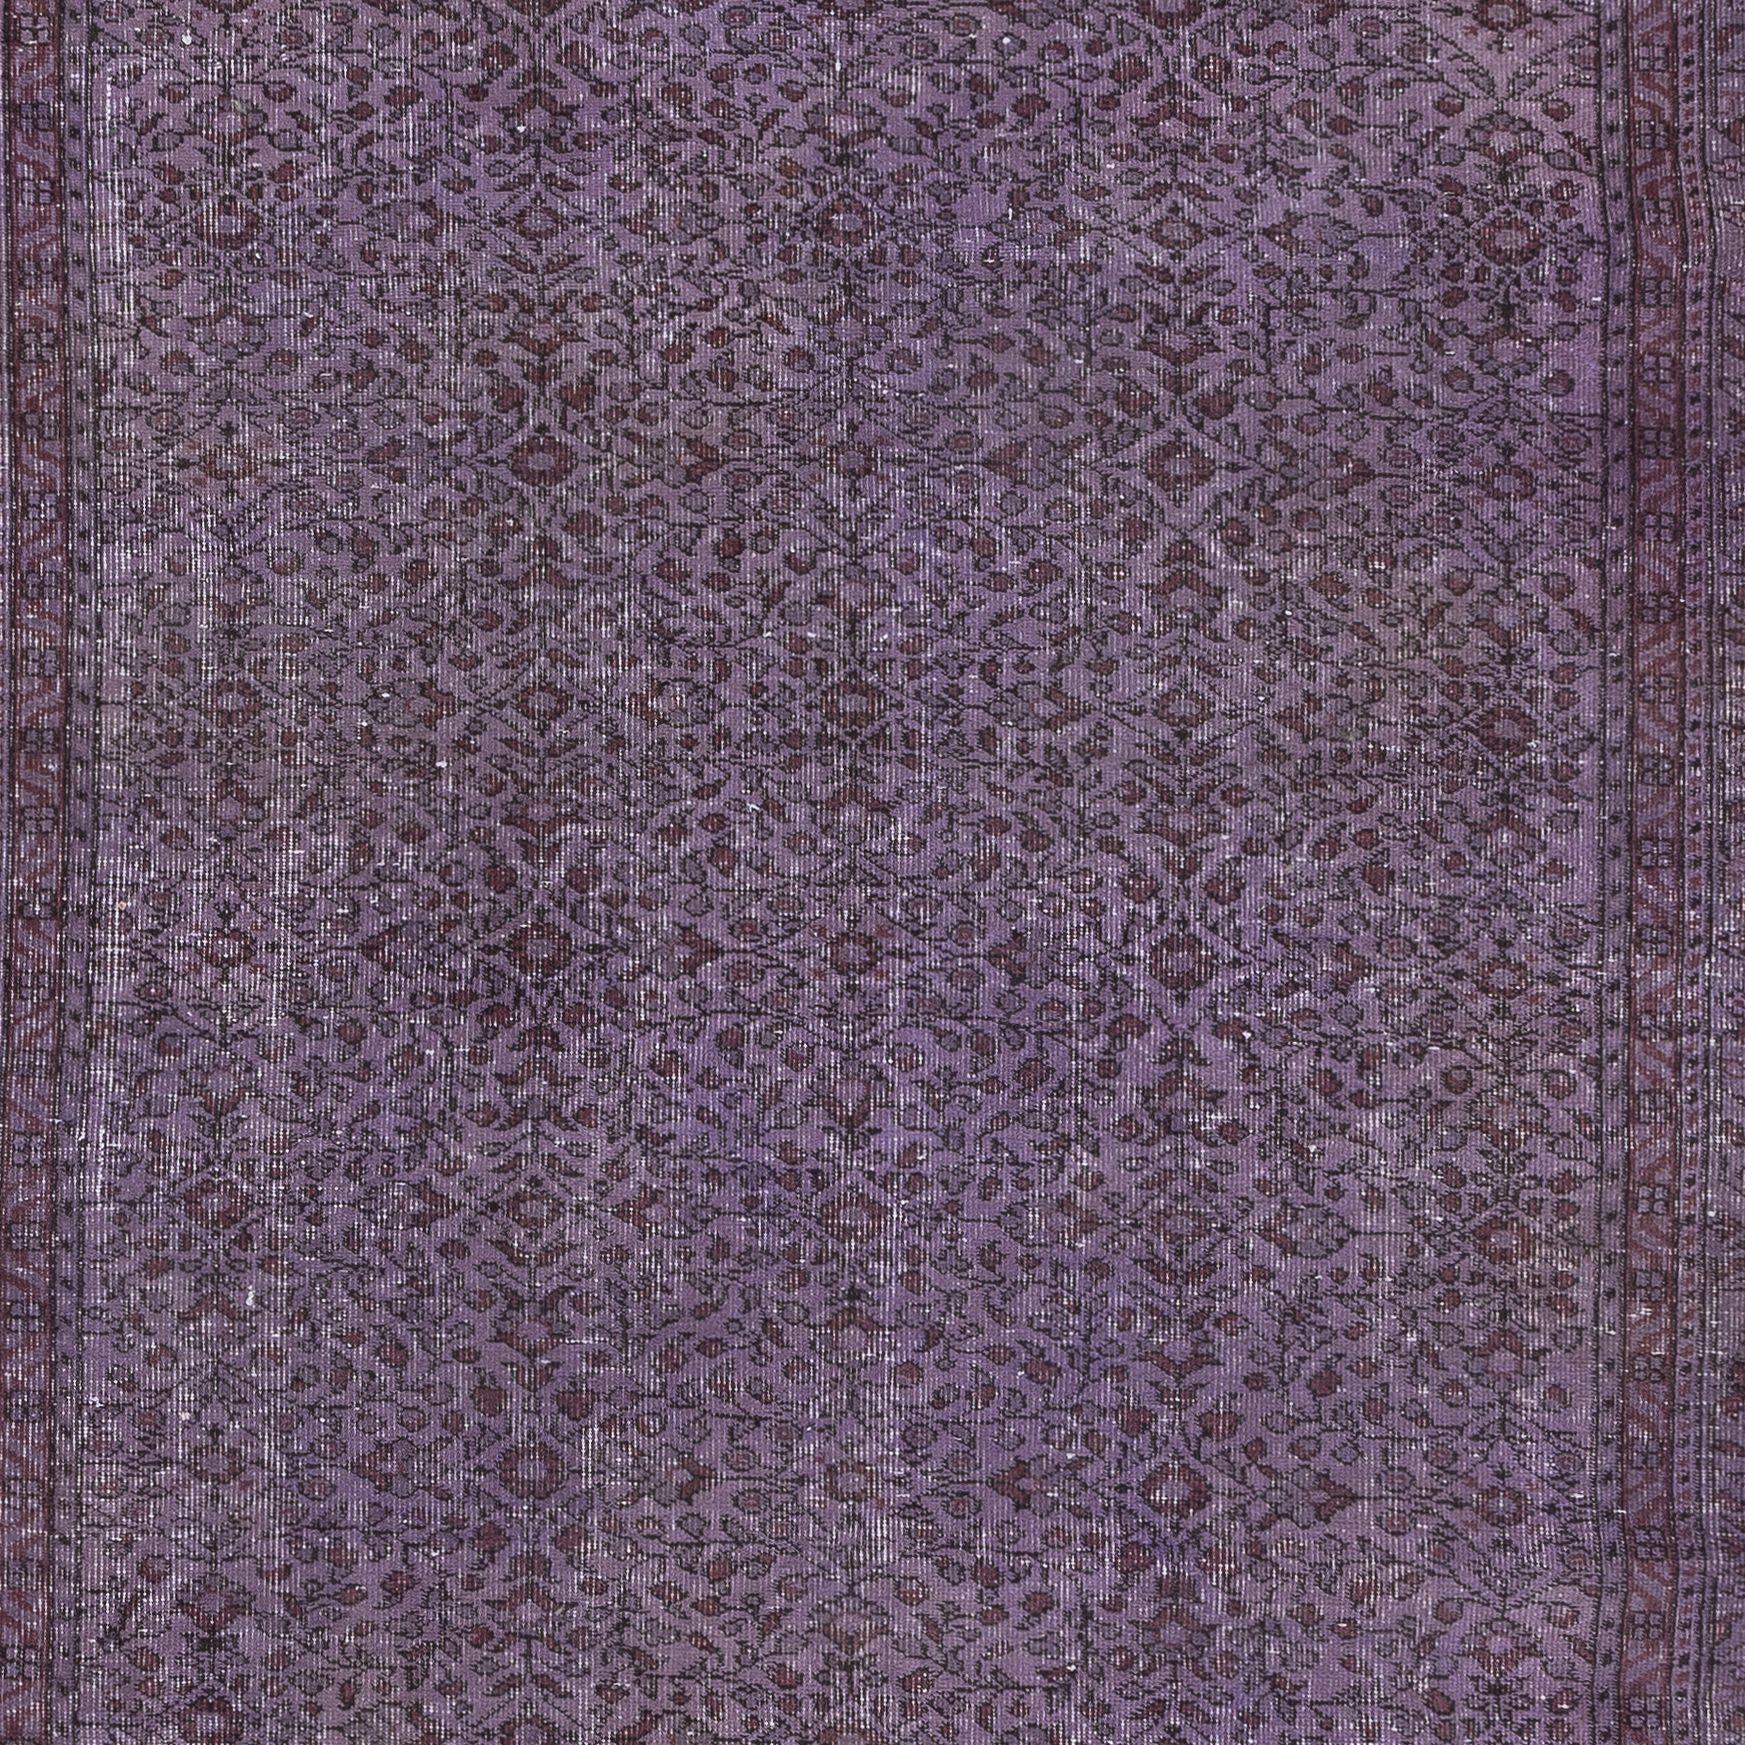 Modern 6.2x9.3 Ft Splendid Handmade Turkish Rug with Flower Design & Purple Background For Sale